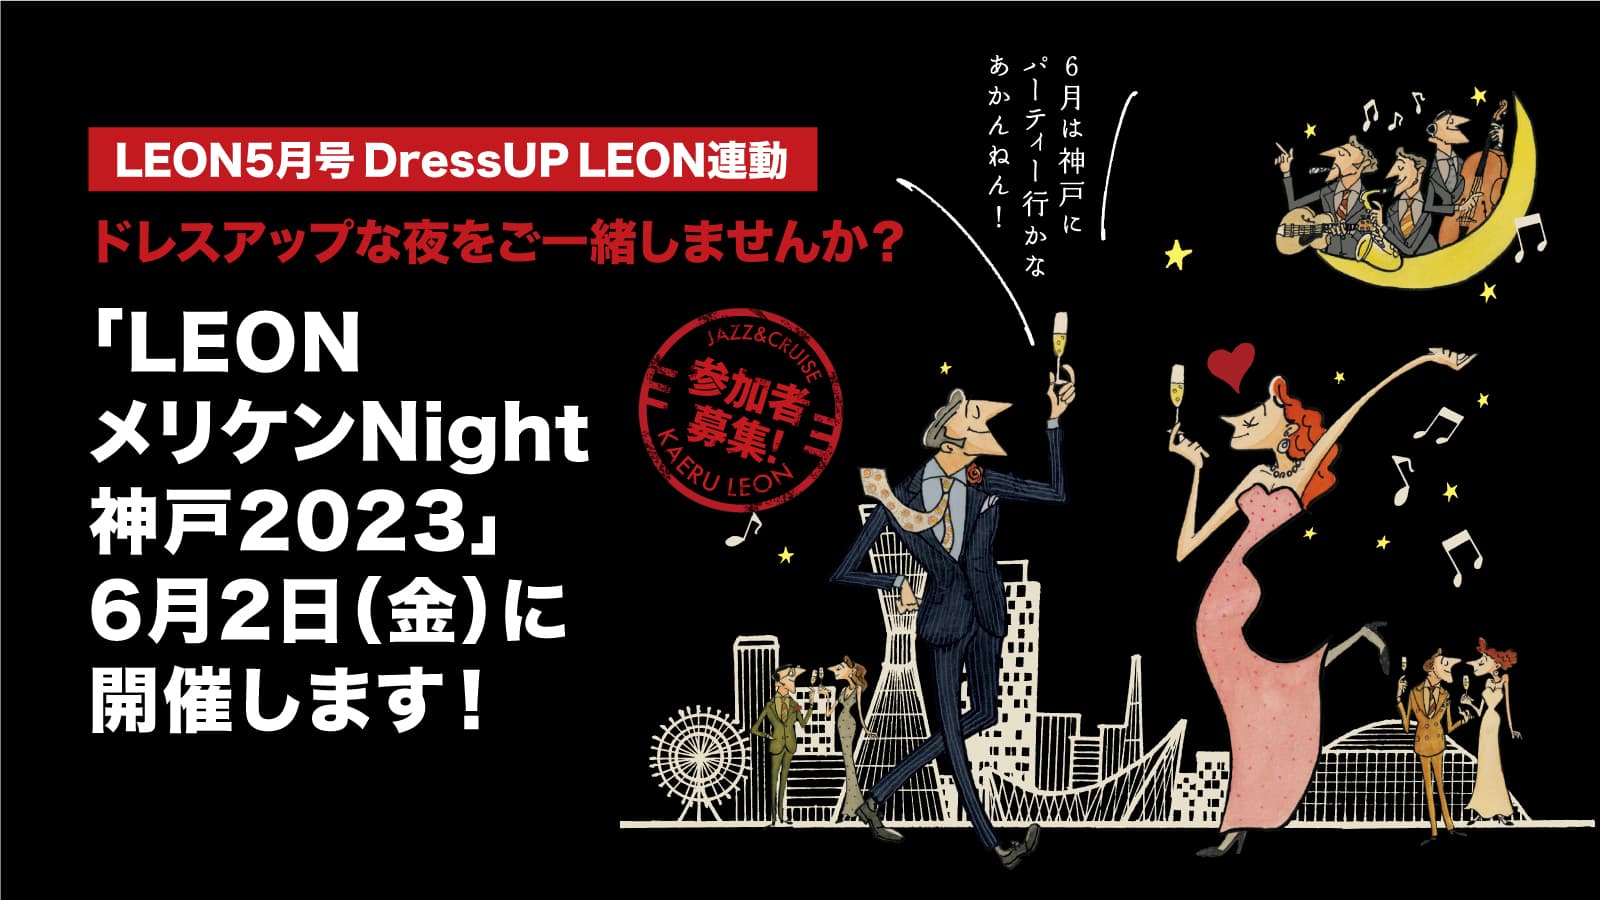 “LEON Meriken Night Kobe 2023” will be held on Friday, June 2nd!